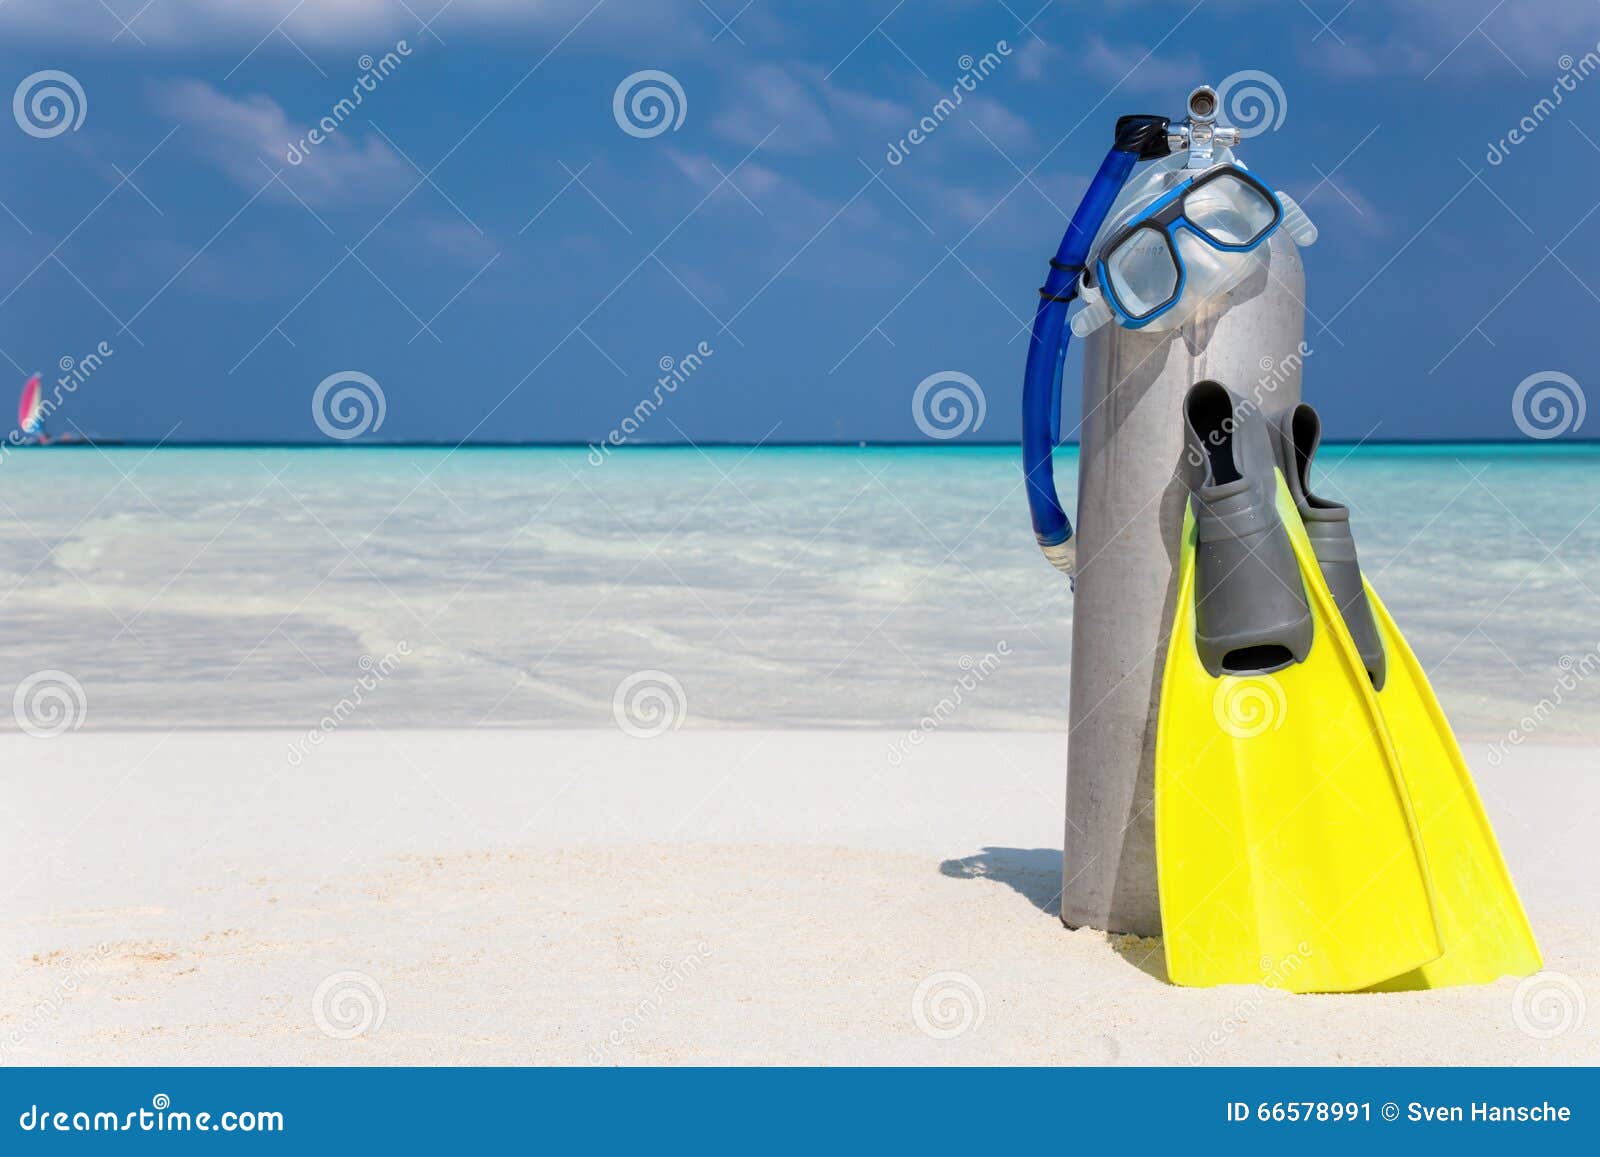 scuba diving gear on beach